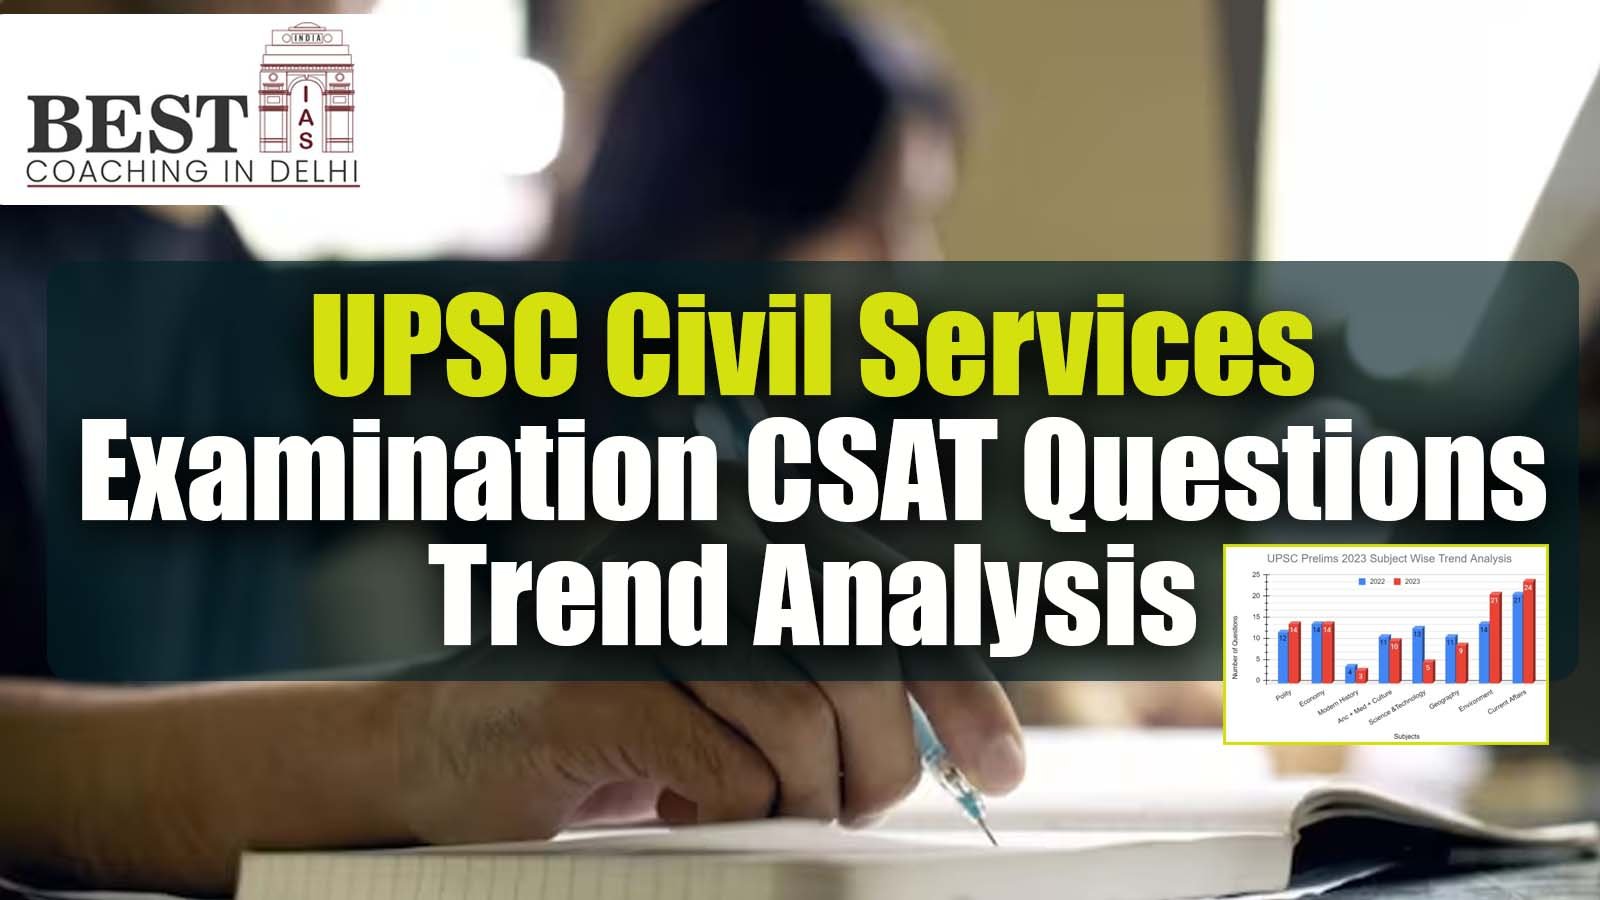 UPSC Civil Services Examination CSAT Questions Trend Analysis 